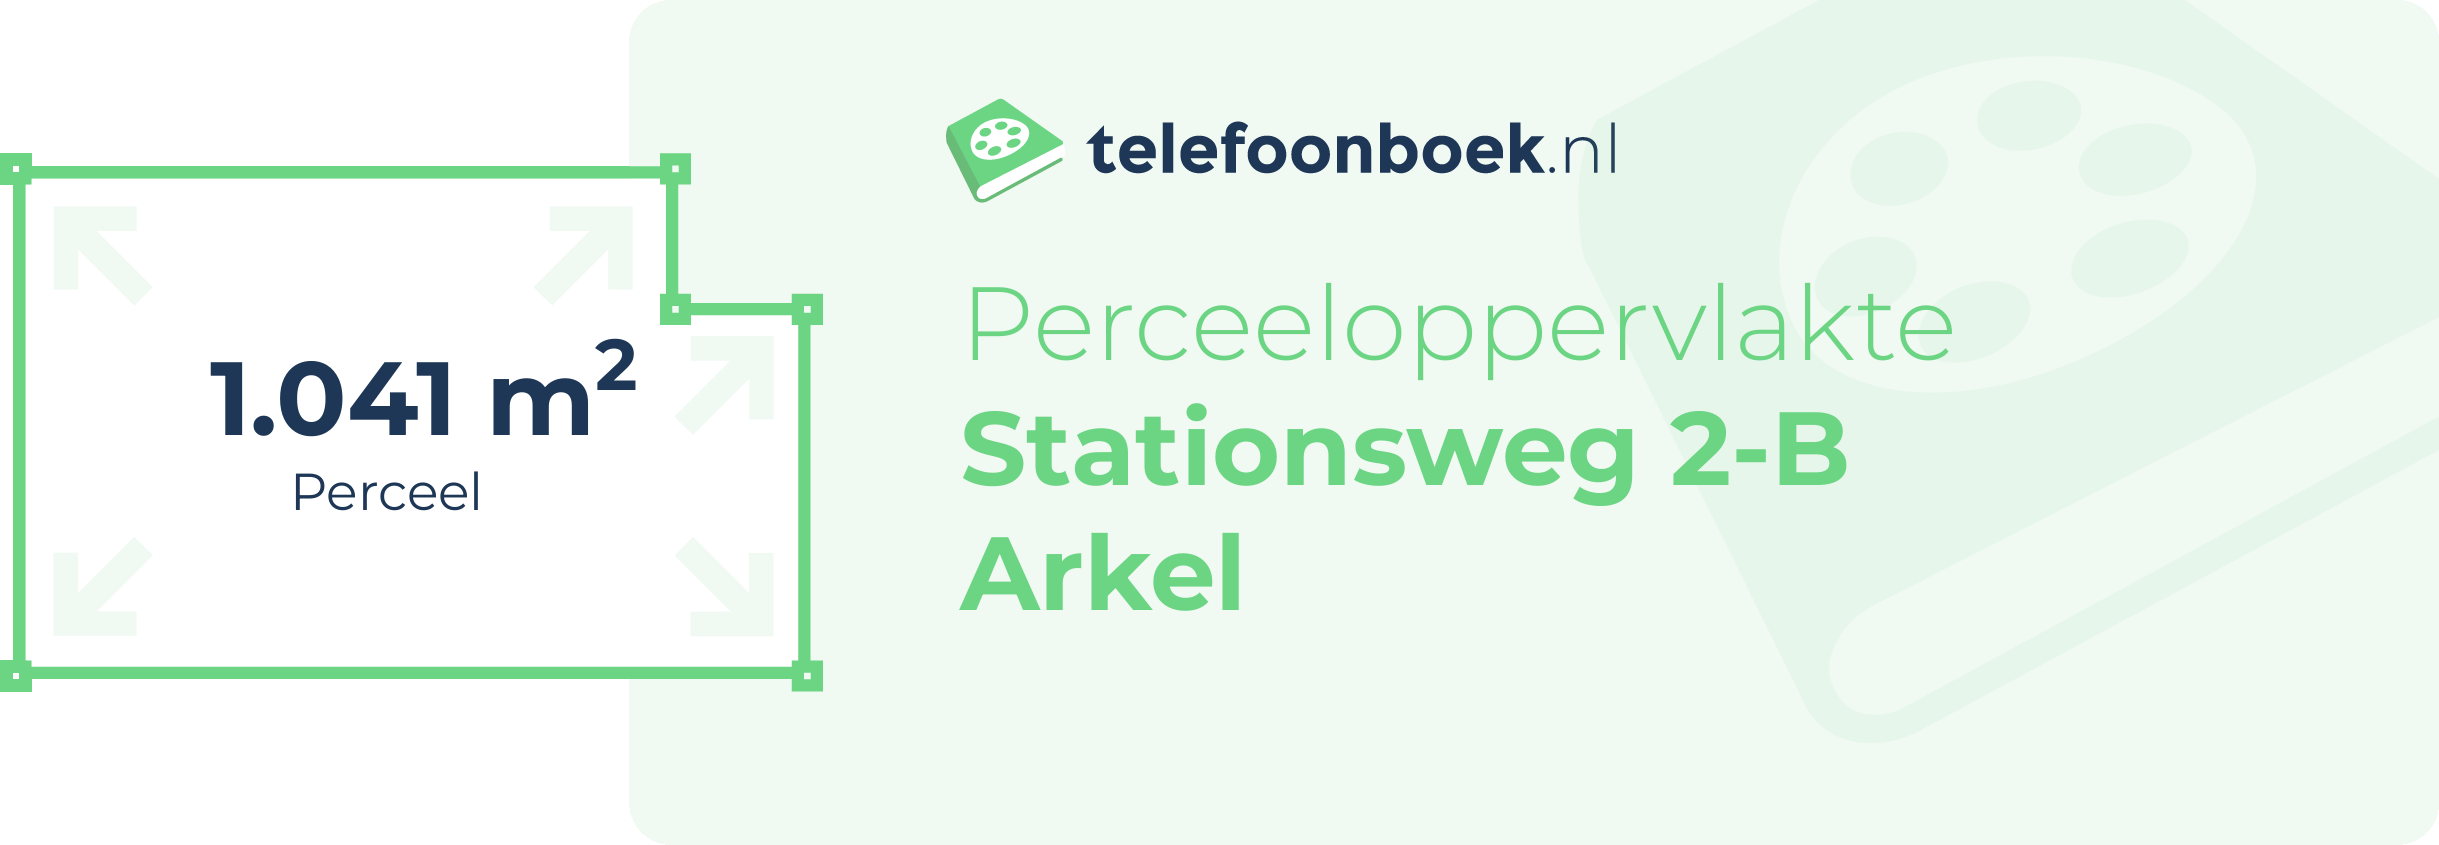 Perceeloppervlakte Stationsweg 2-B Arkel